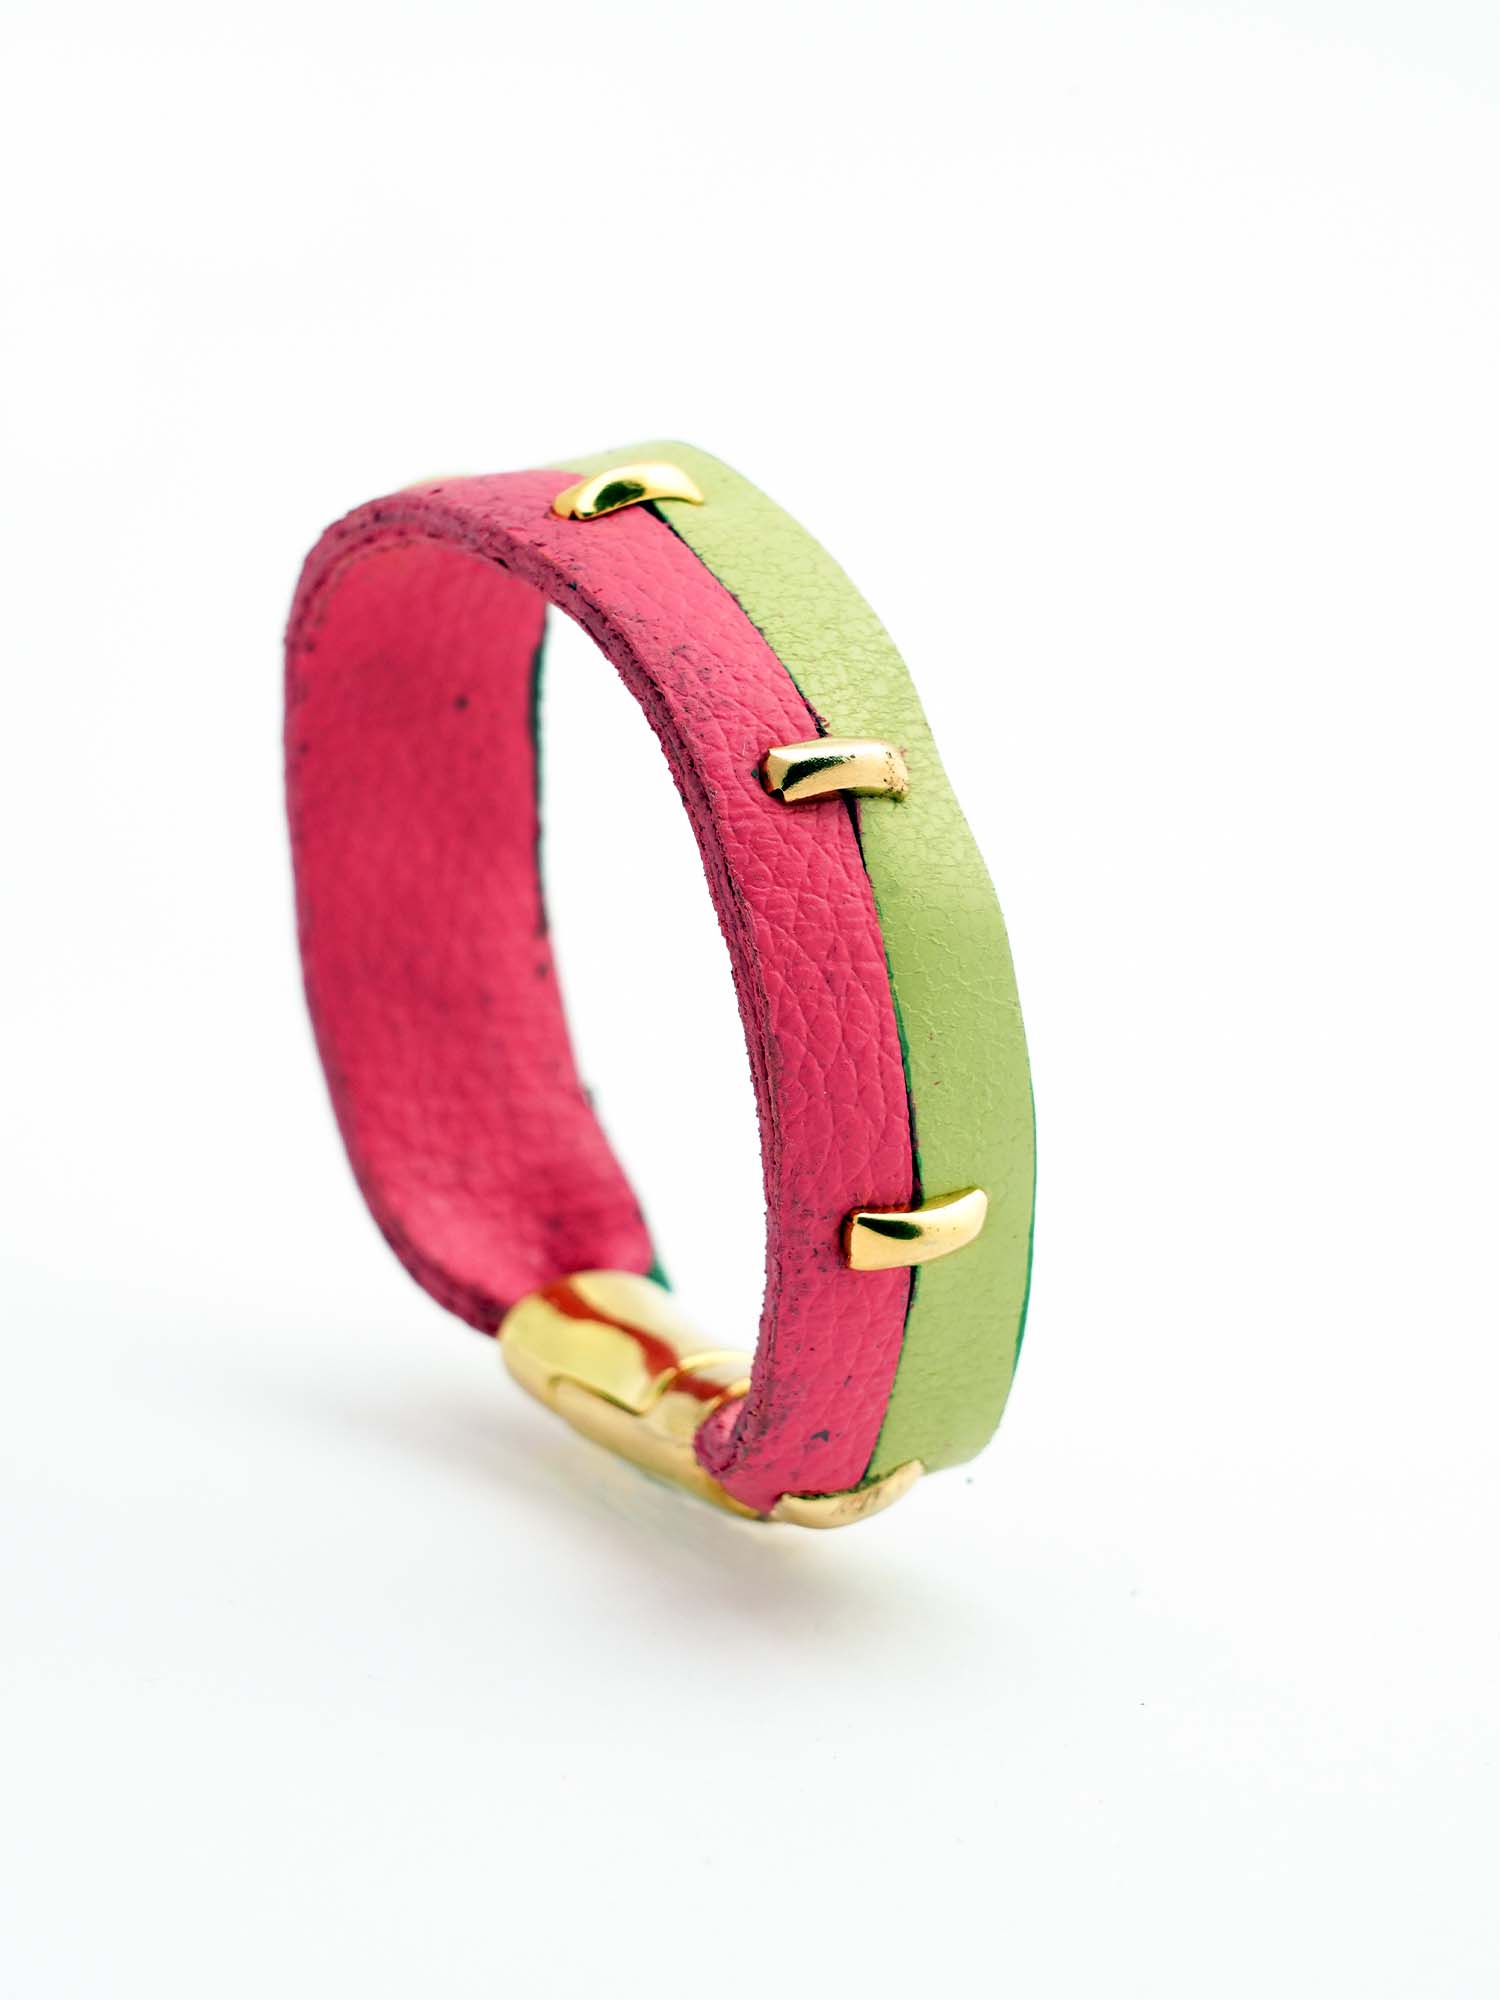 Buy PinkGreen leather bracelet for men 